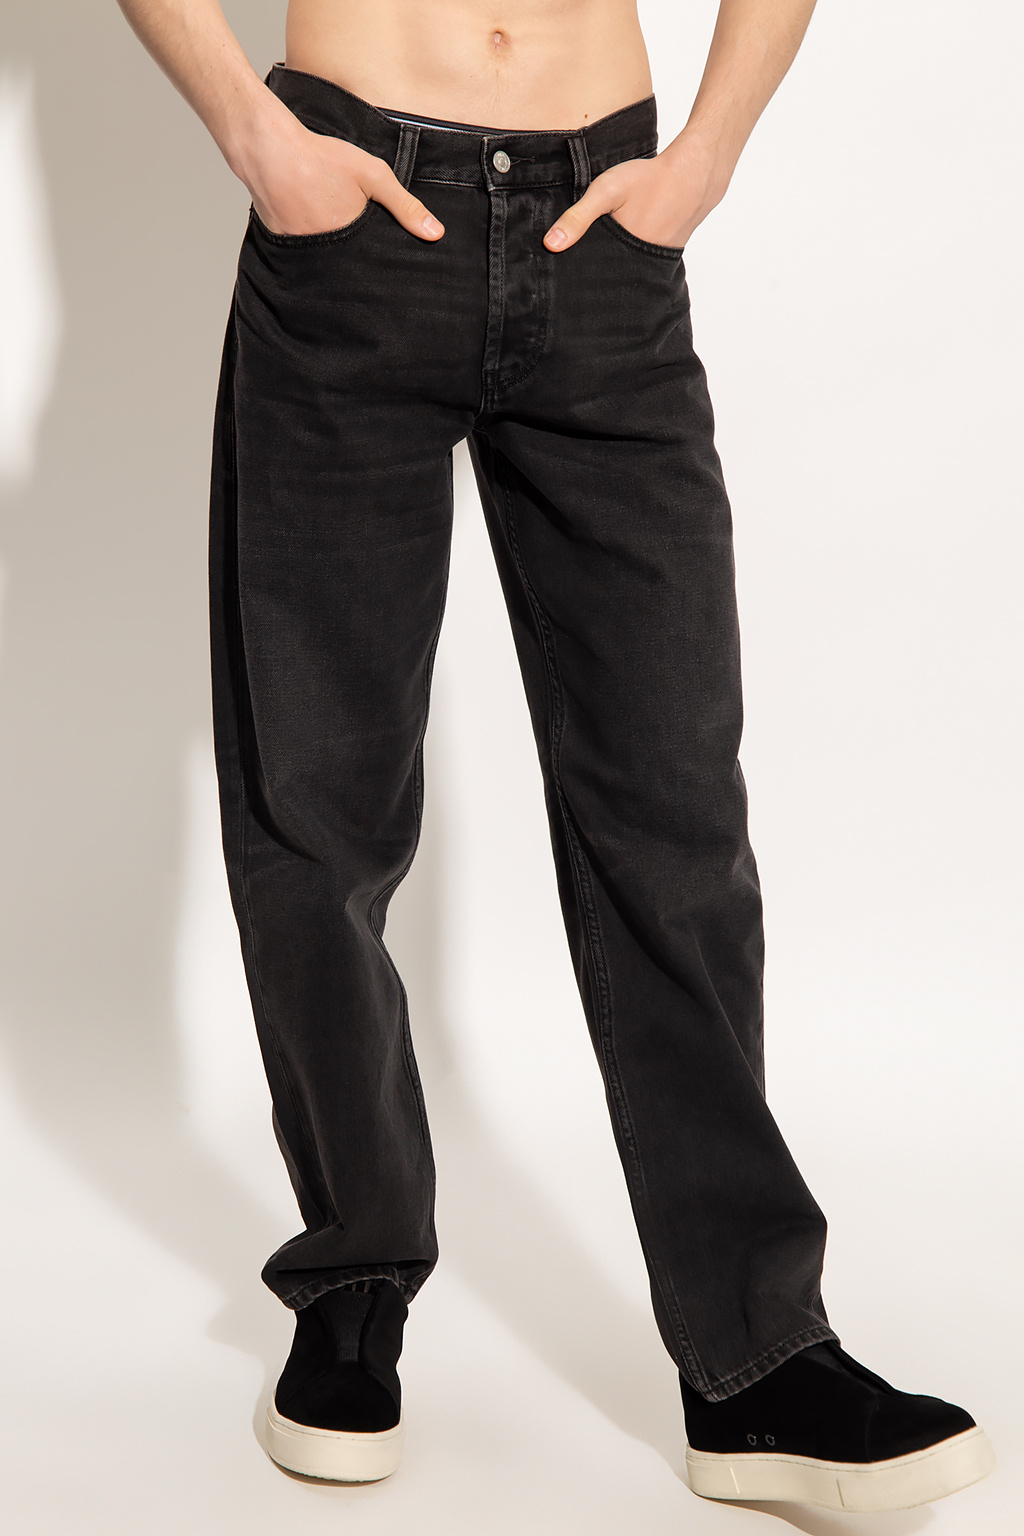 Diesel '2010' loose | StclaircomoShops | jeans Men's Clothing - Abercrombie & Fitch 3-pack t-shirts med rund halsringning i olika färger